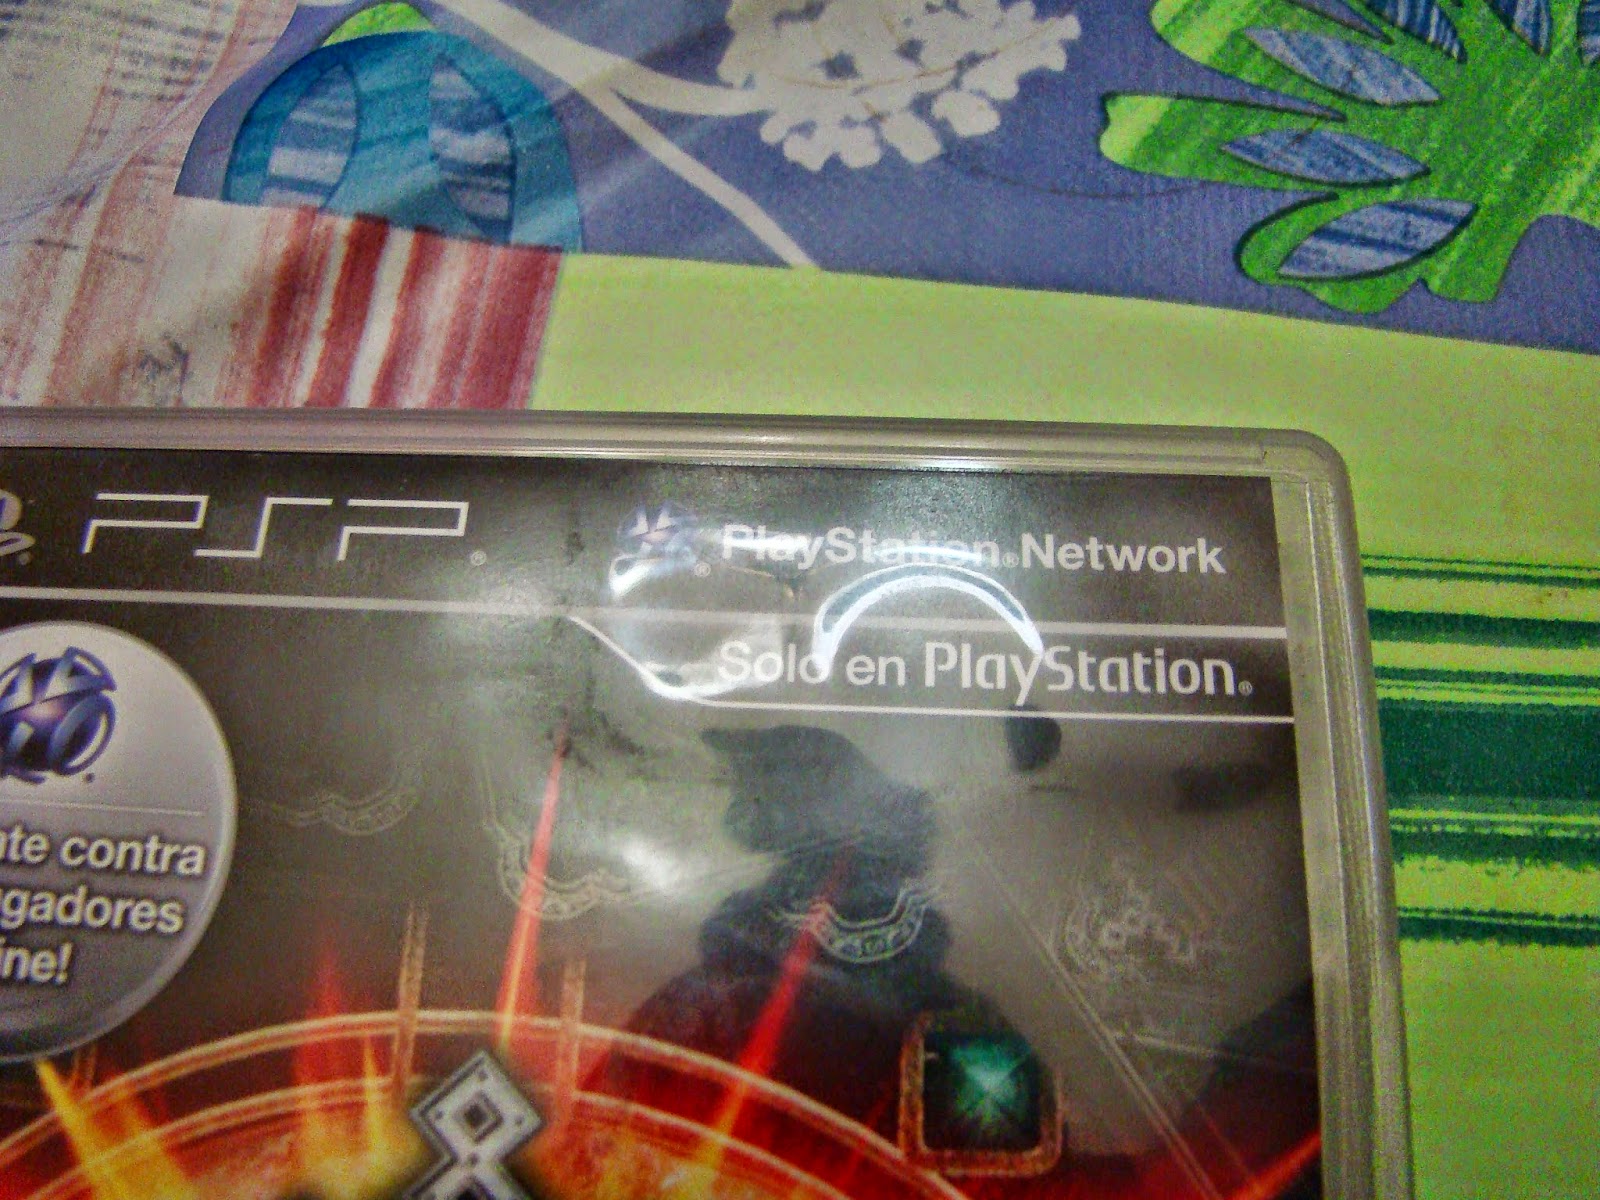 The Eye of Judgment para PSP restos de pegamento por Game